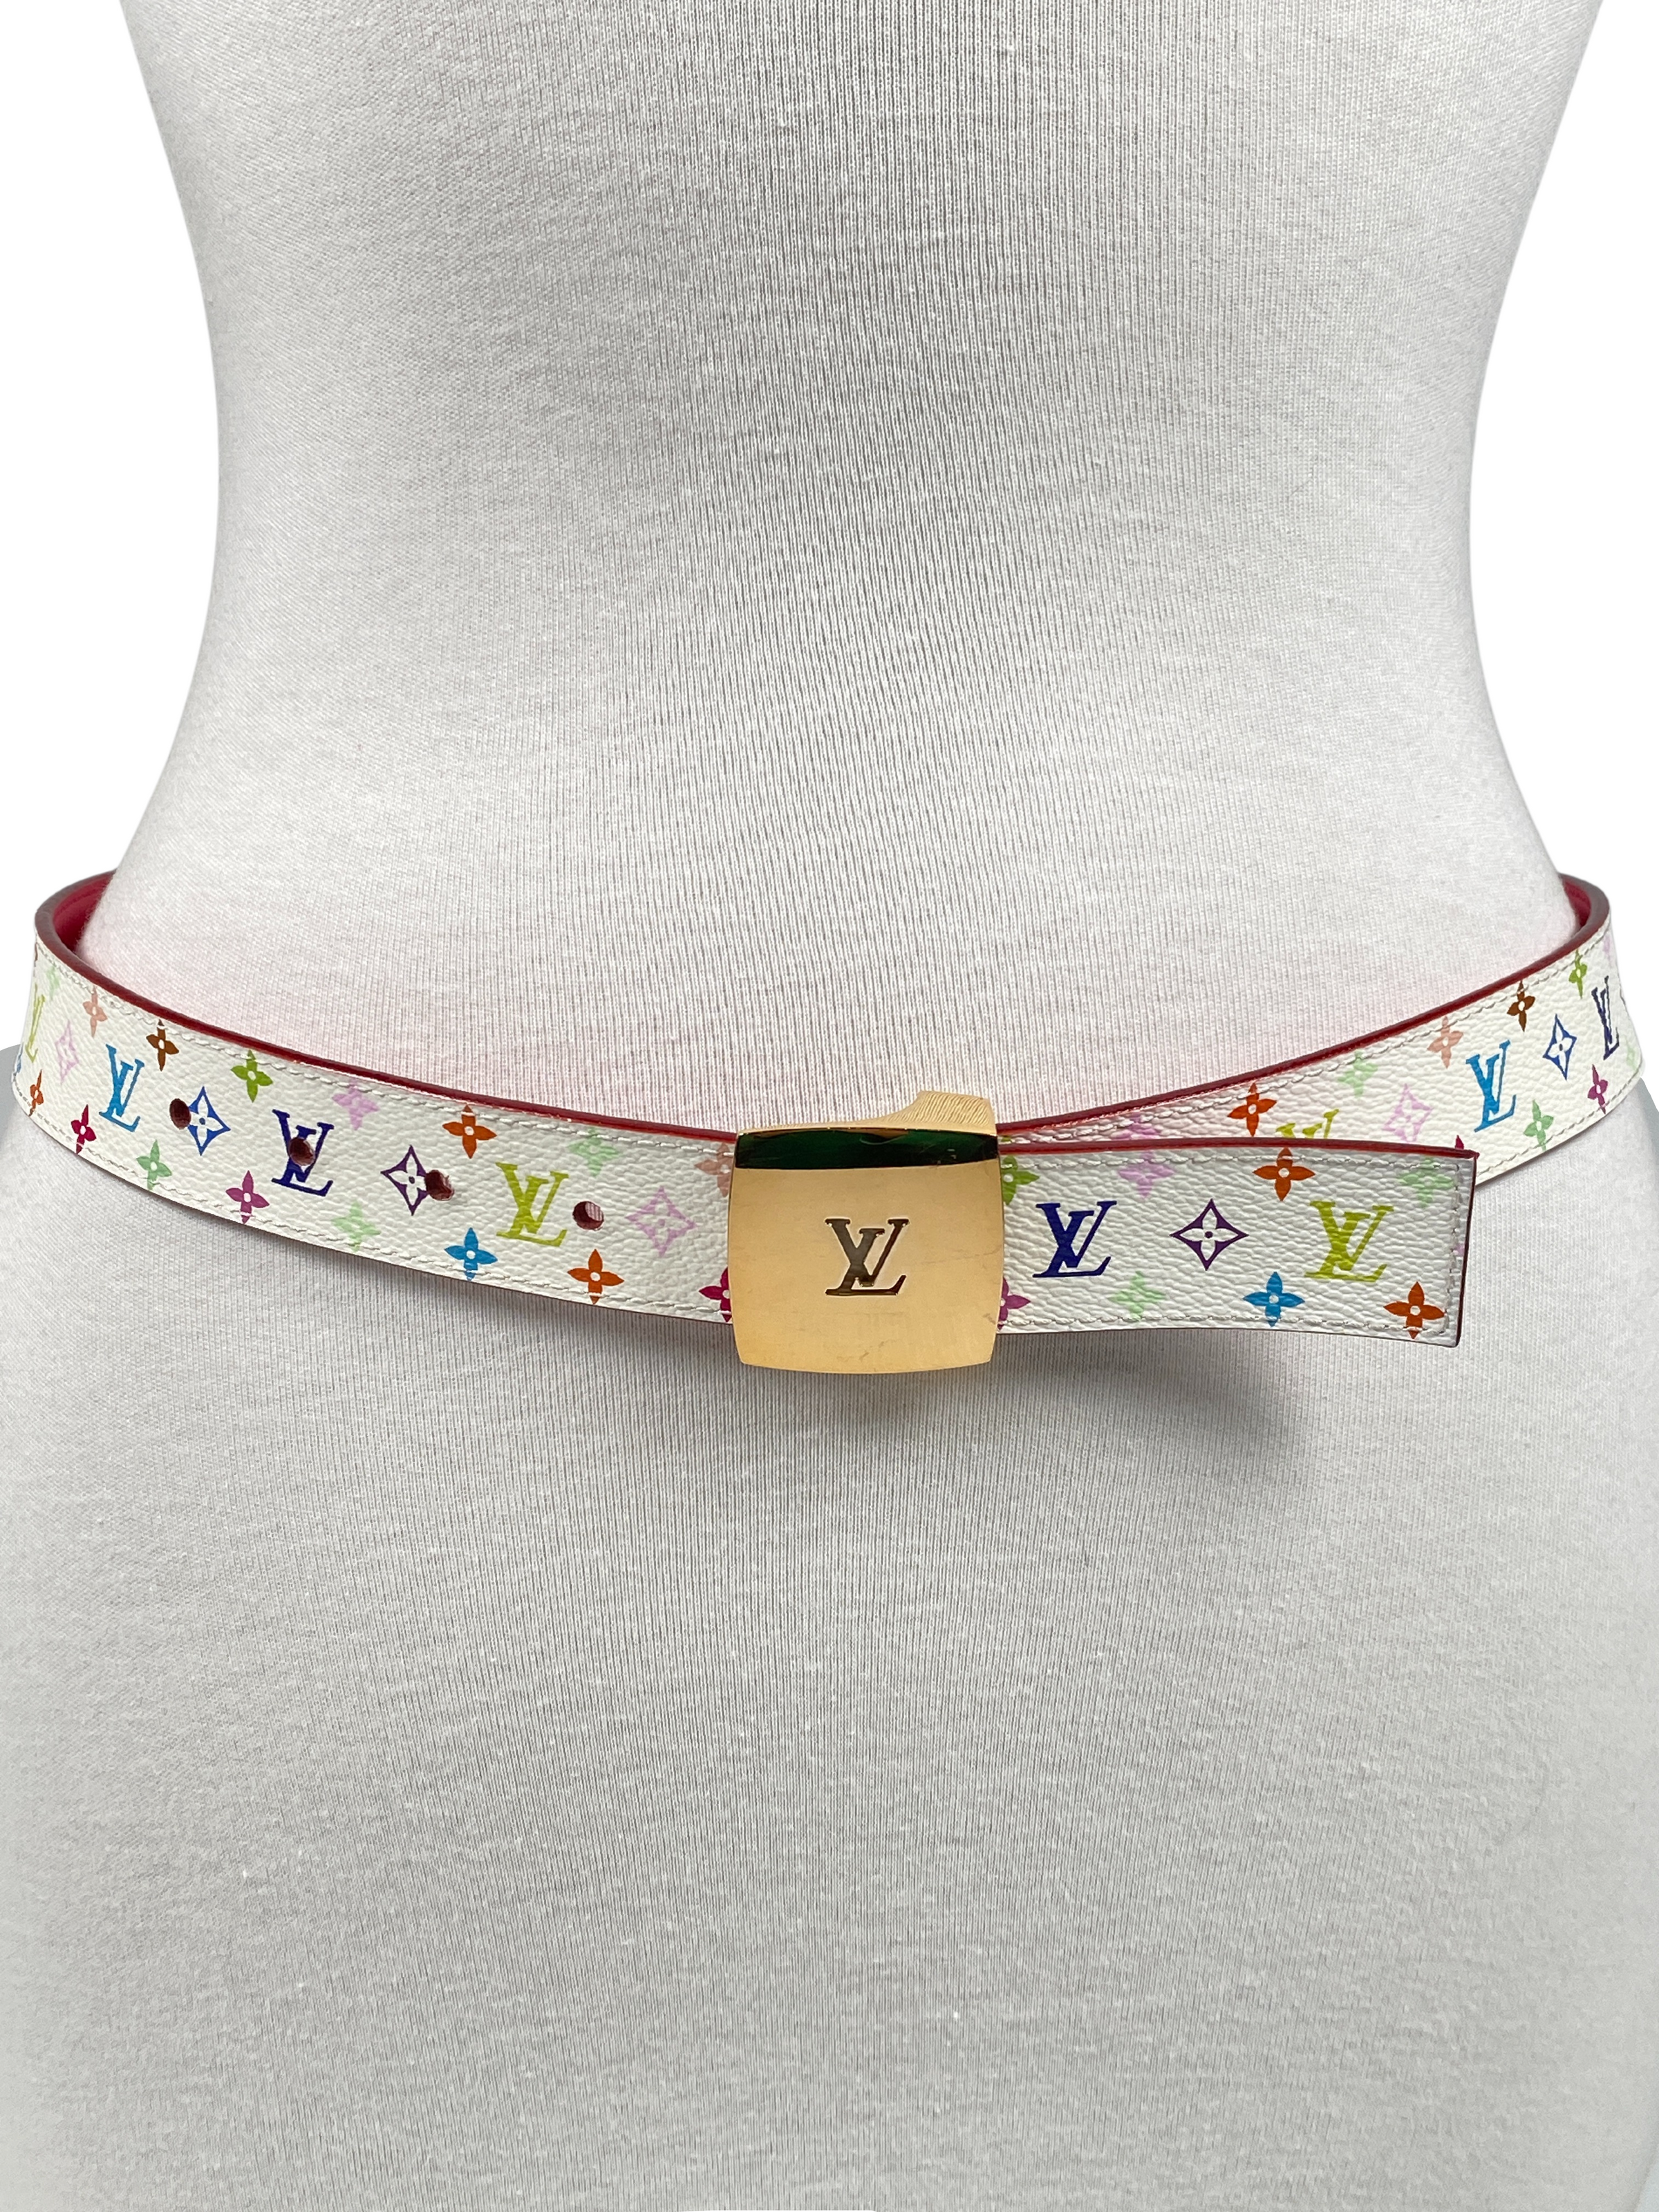 Sell Louis Vuitton White Multicolore Monogram Belt - White